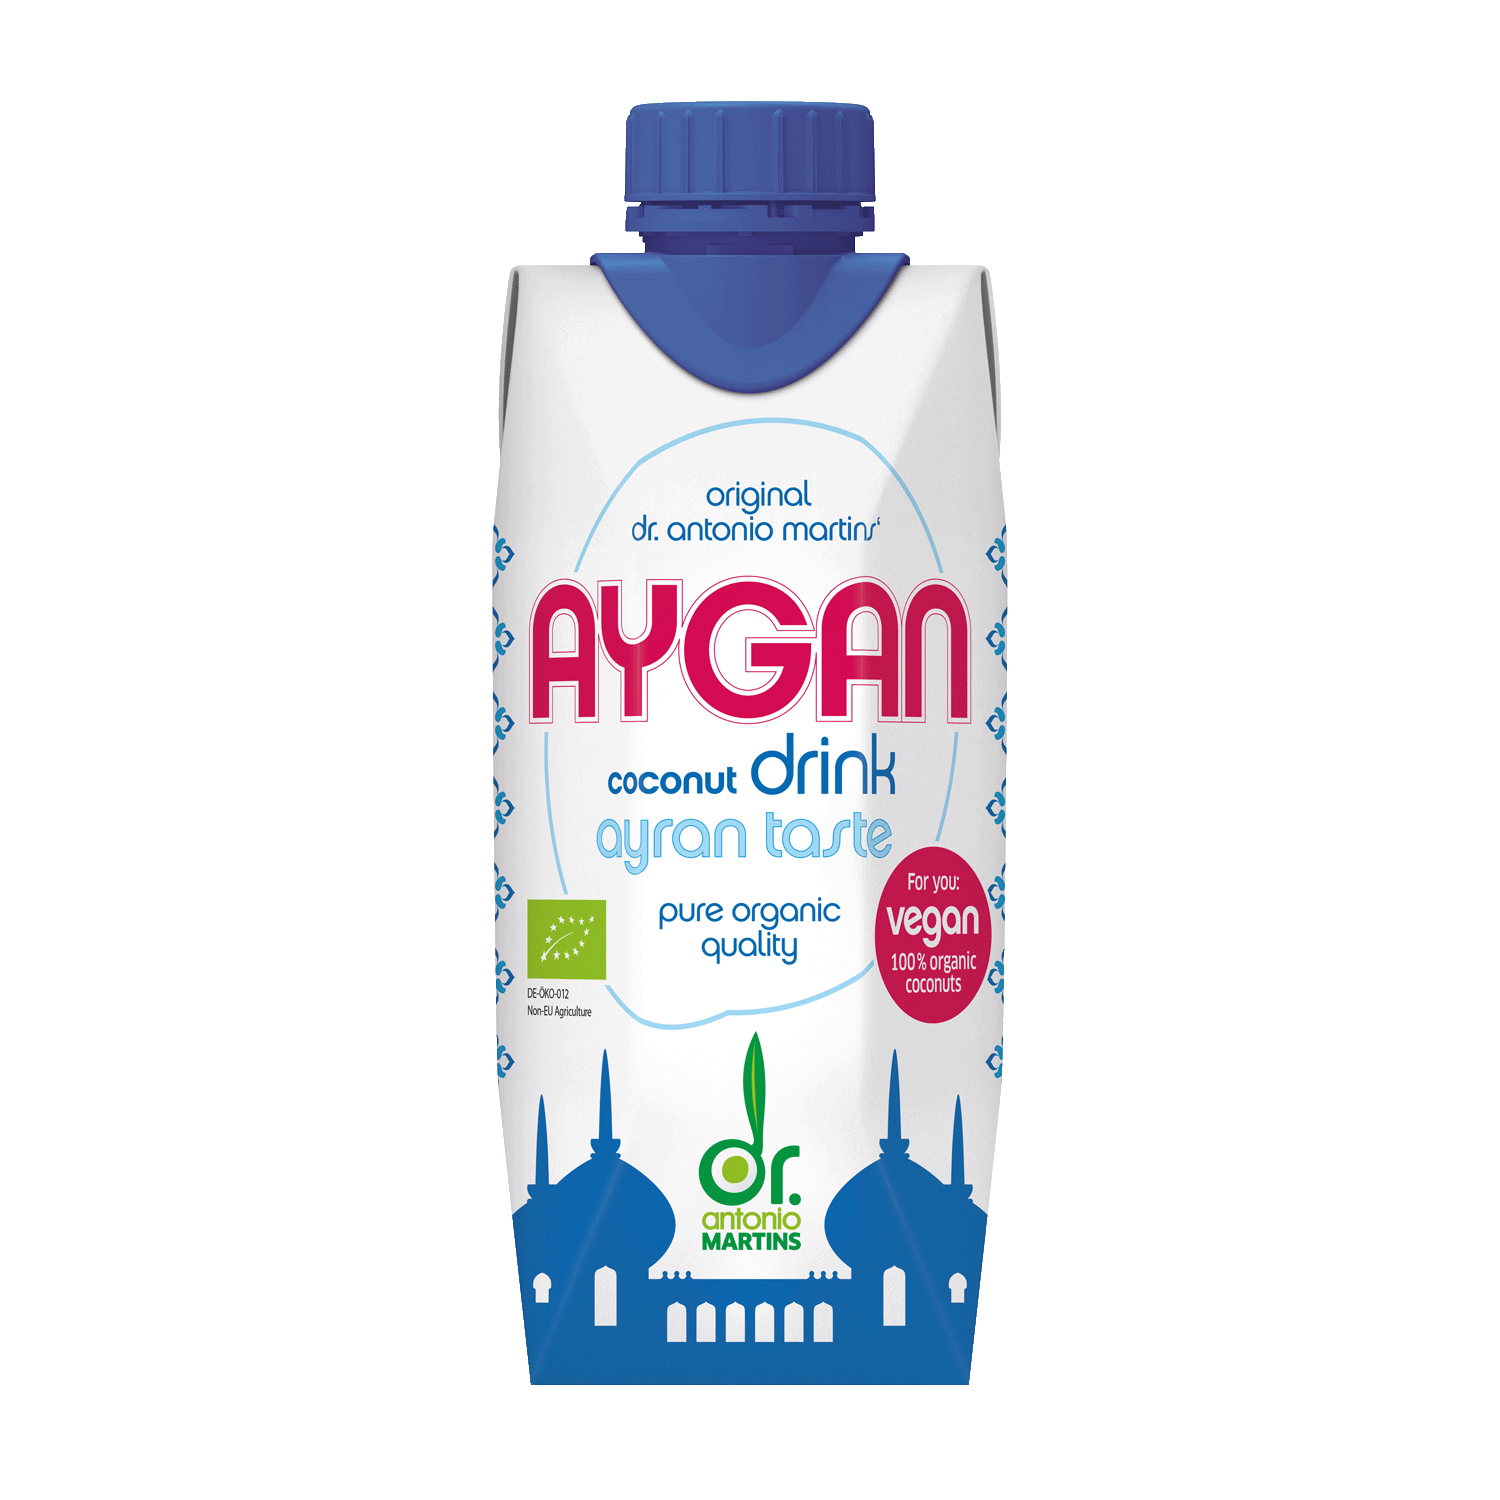 Coconut Drink Aygan, Organic, 330ml